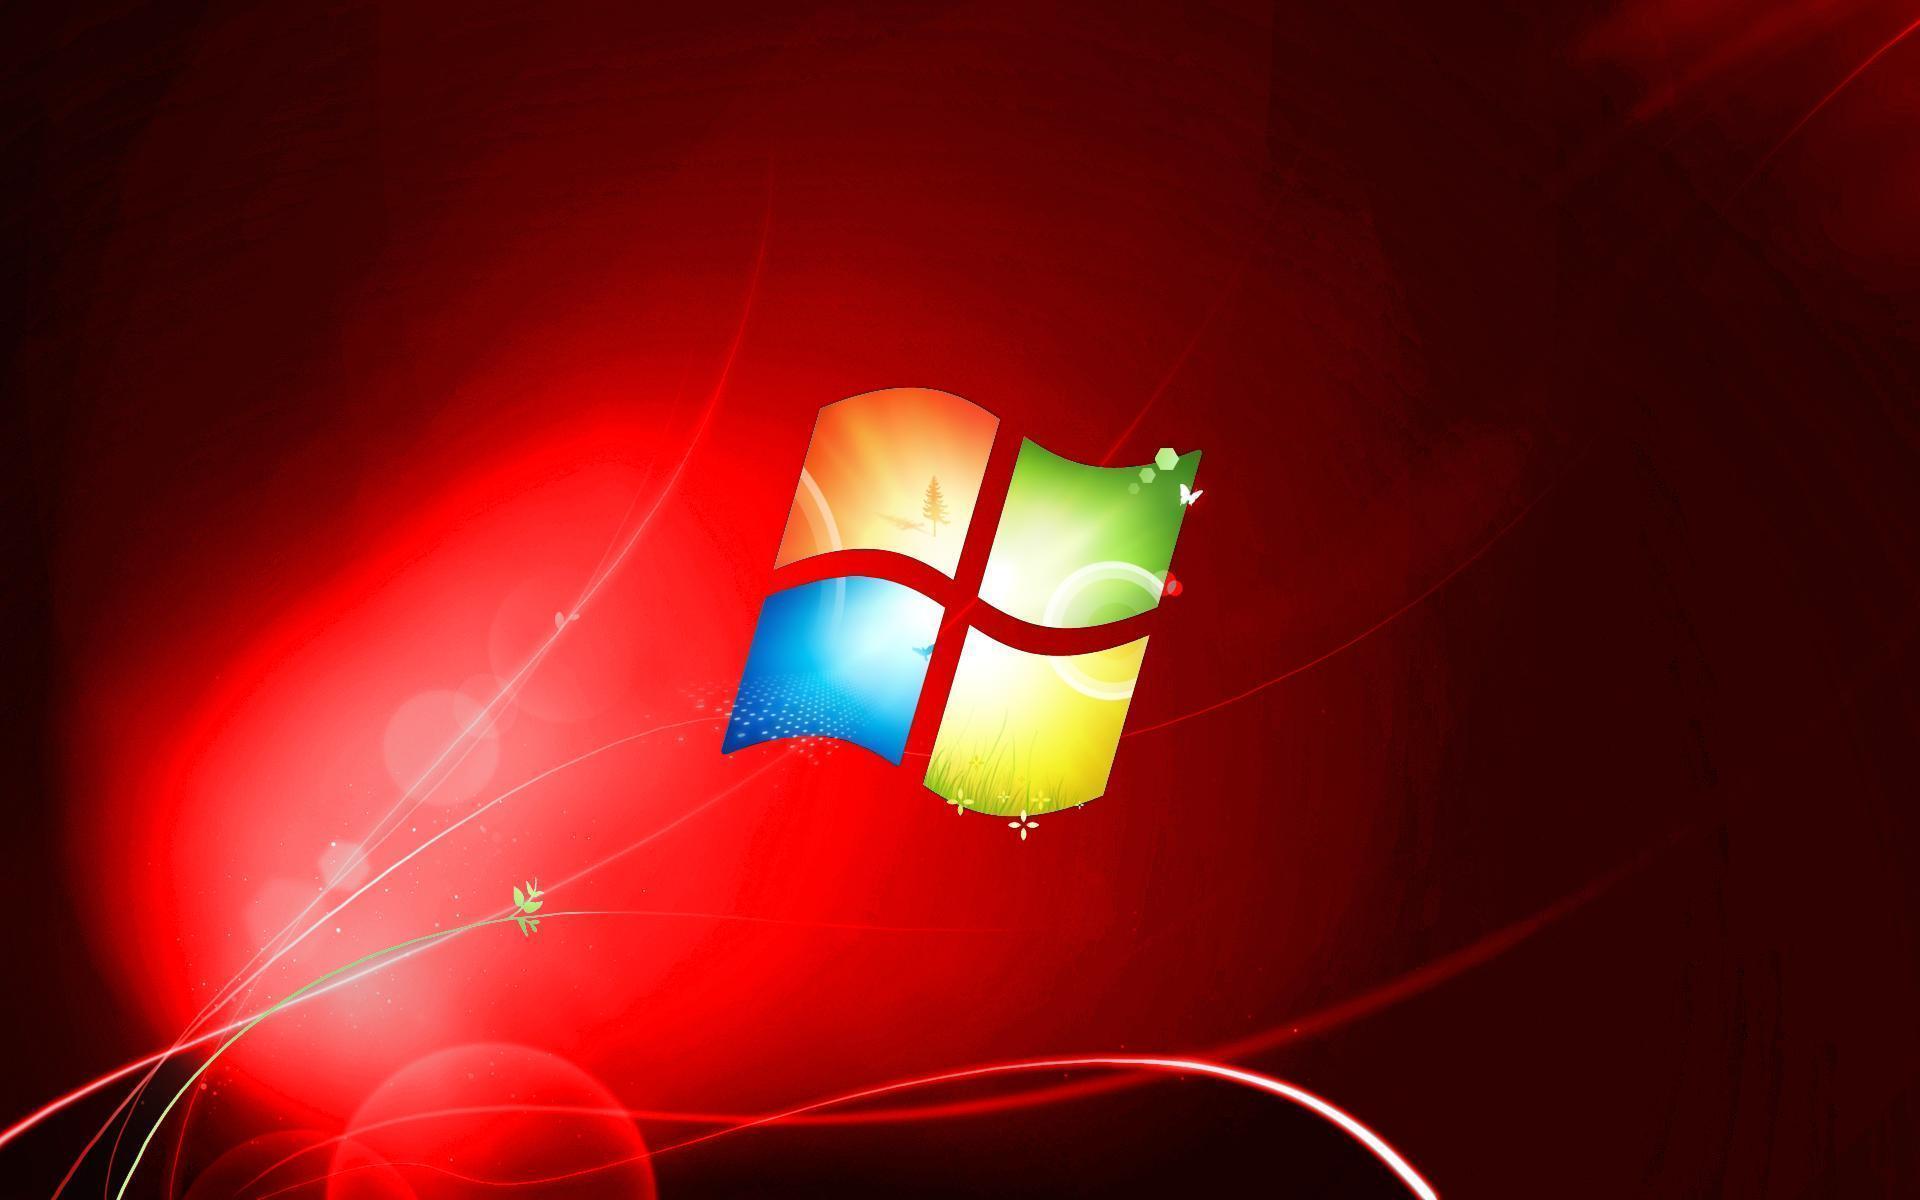 Windows 7 Red Wallpaper HD wallpaper search